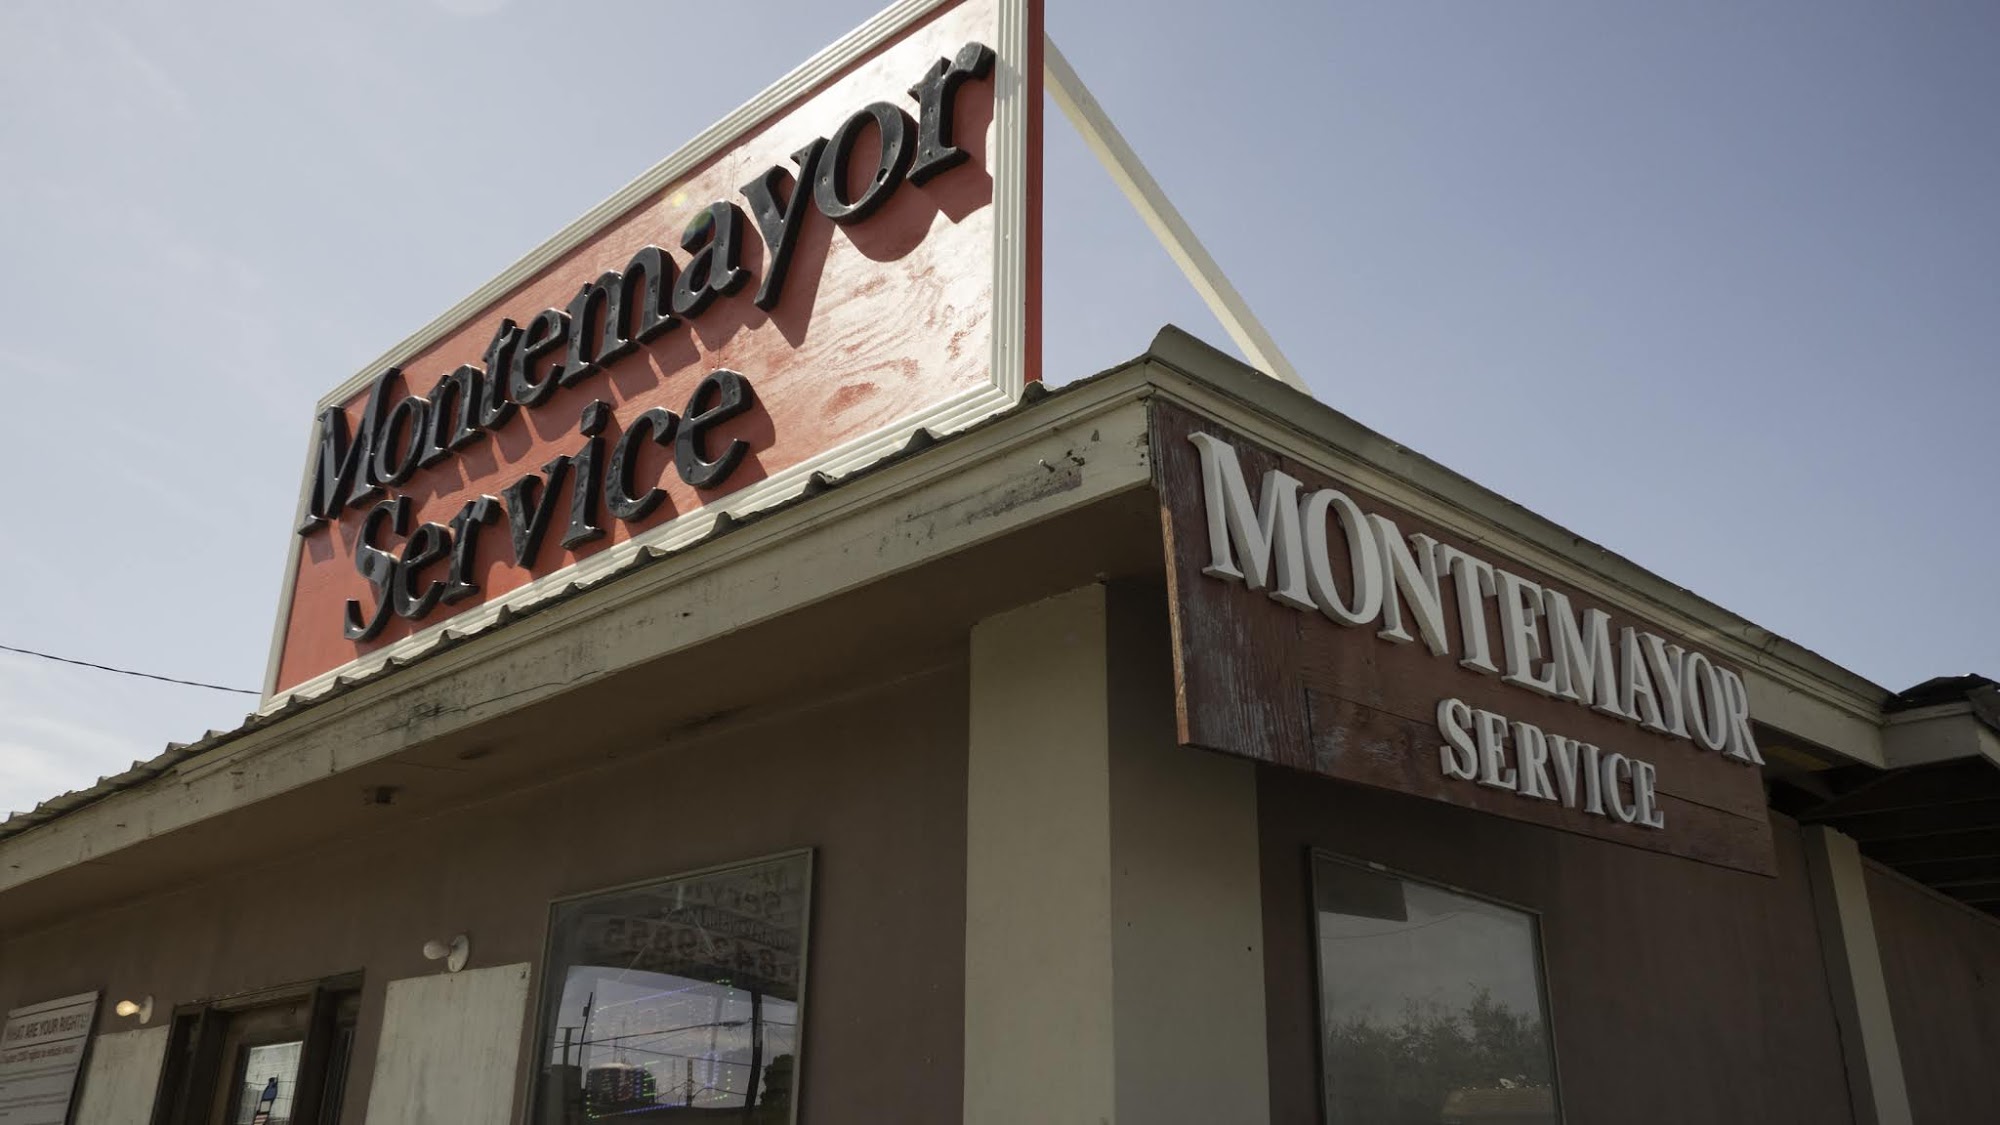 Montemayor Services